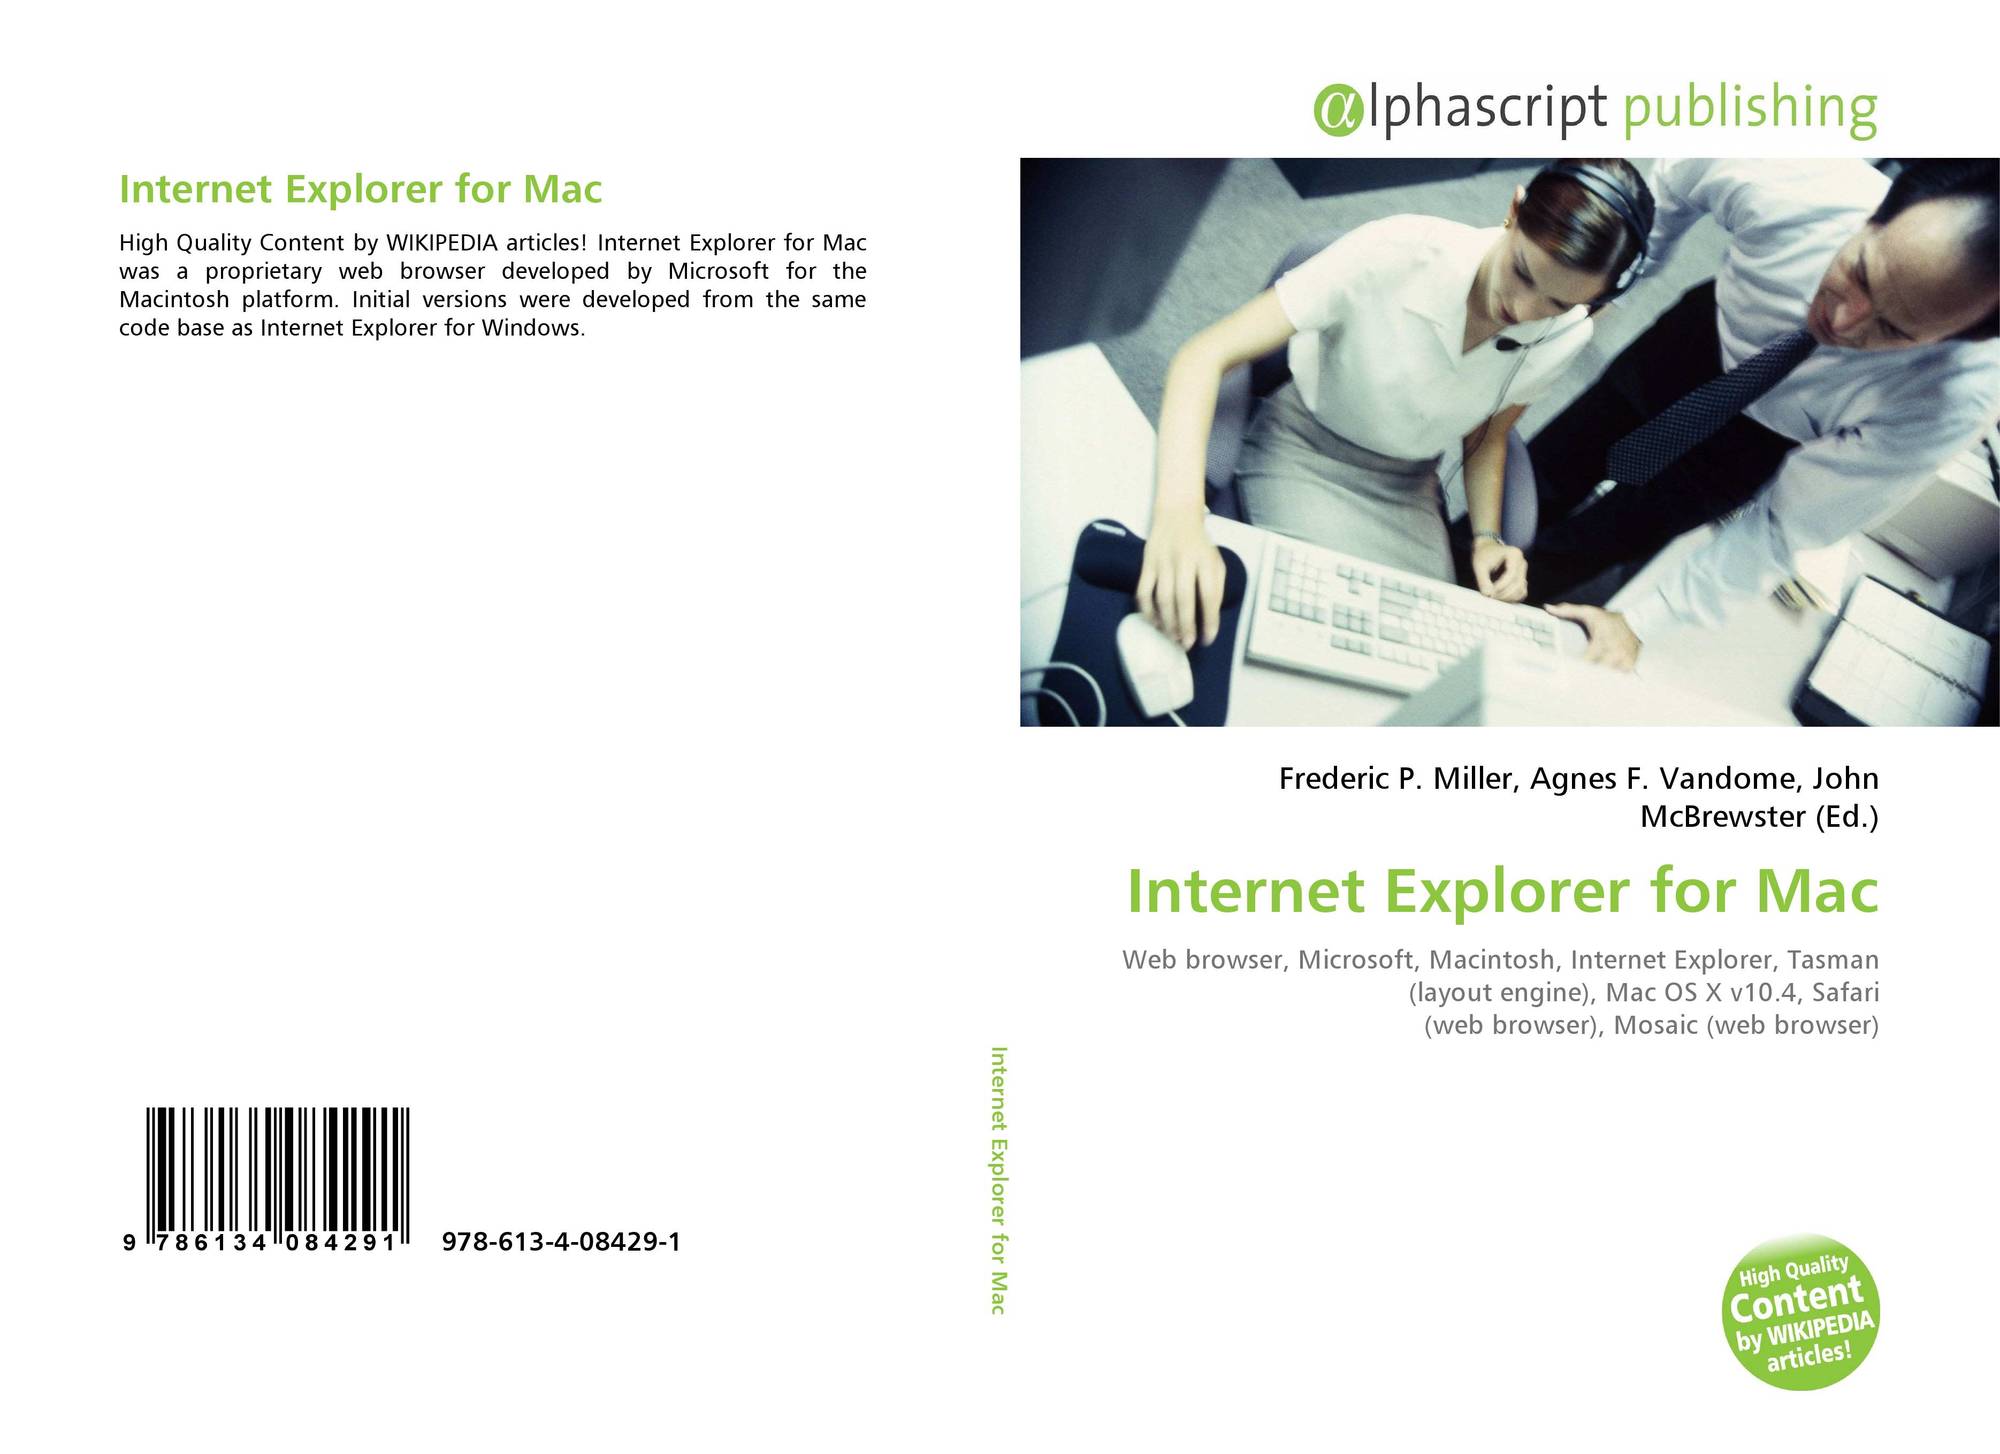 microsoft internet explorer 6.0 for mac